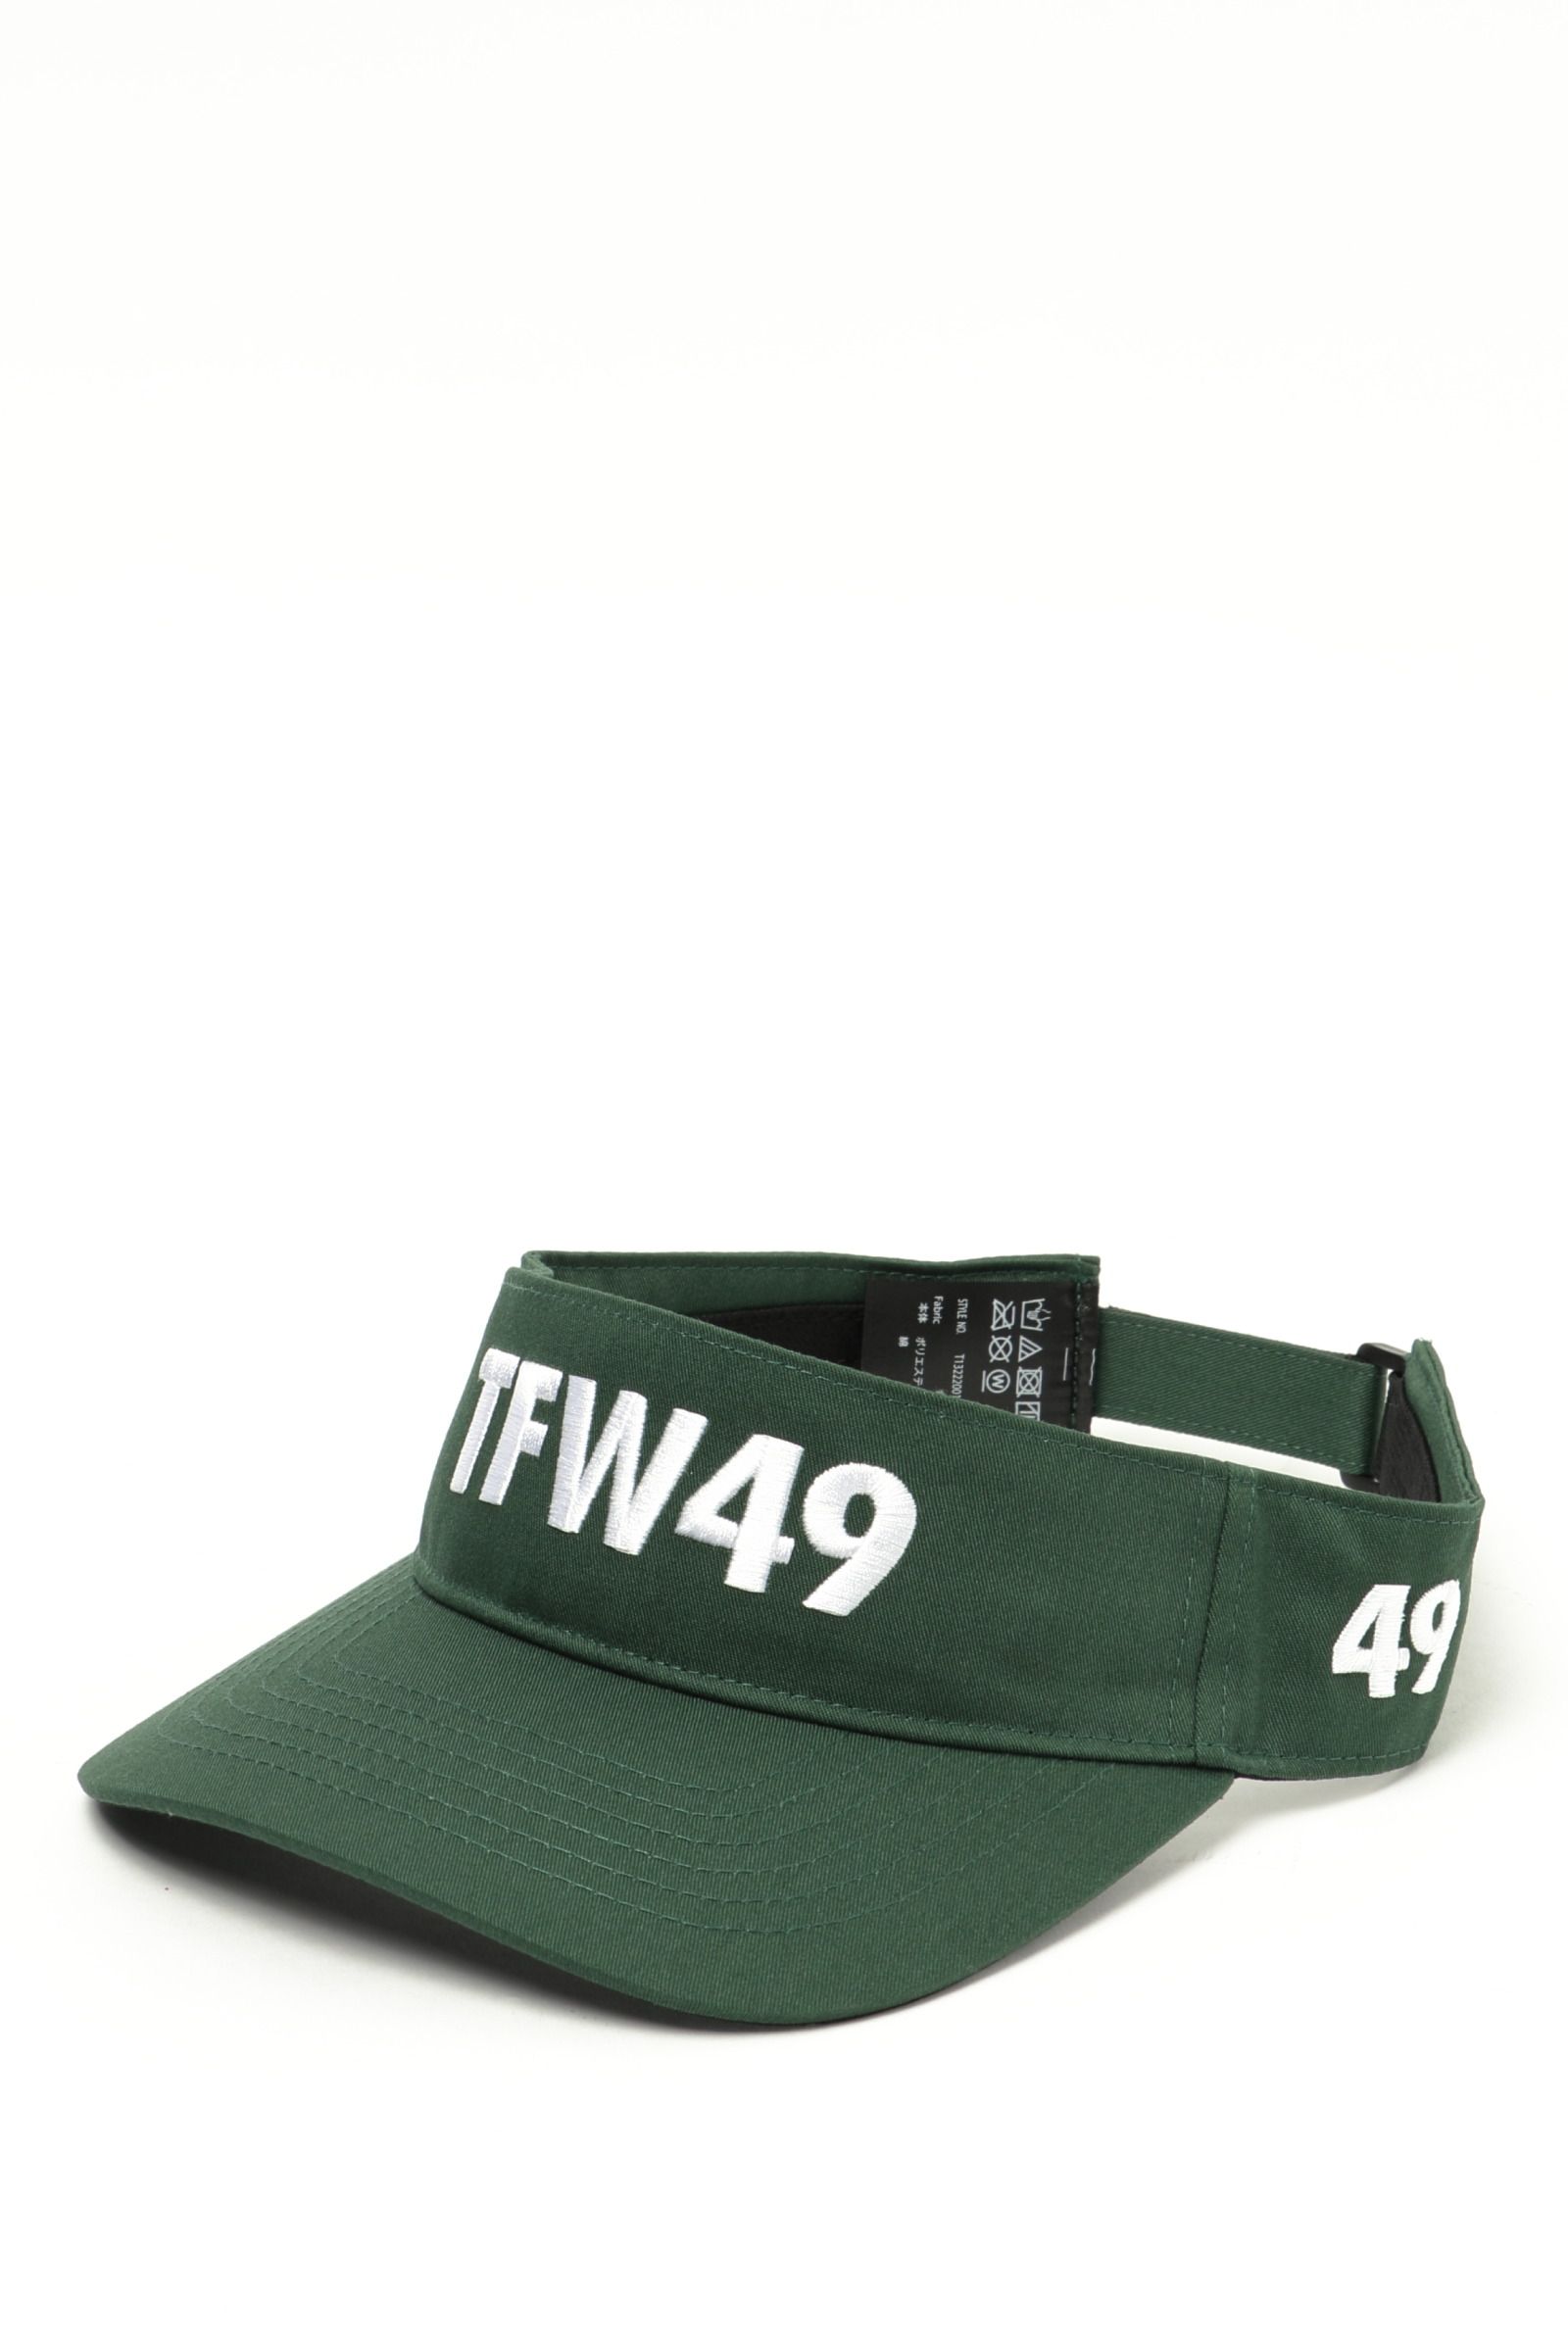 NTLWKR Sun Visor Hat Adjustable Velcro Outdoor Sports Cap for Men